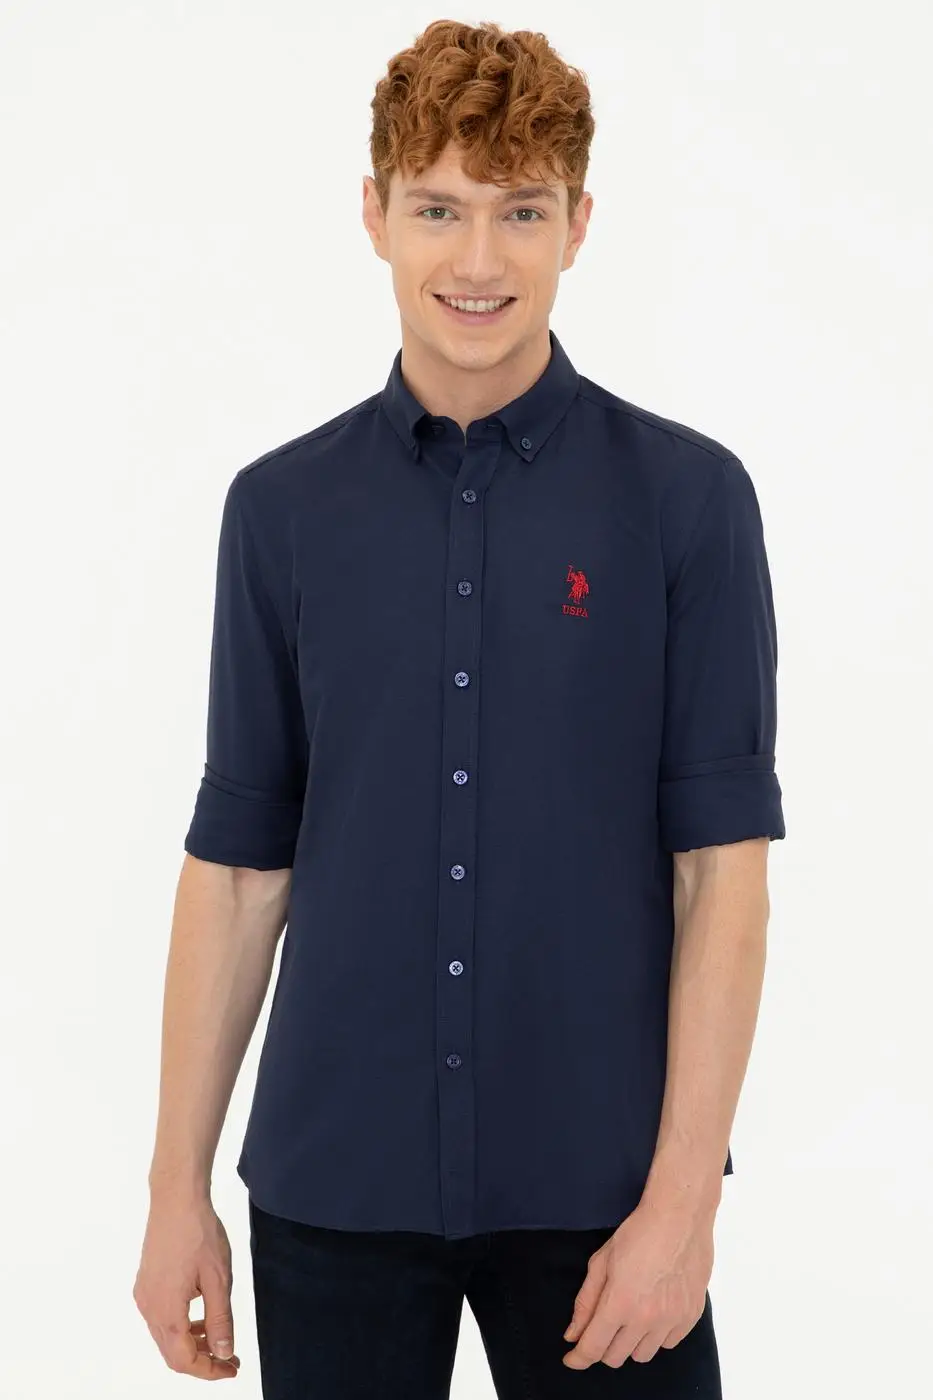 

Original Us. Polo Assn. shirt men Cotton Casual USPA logo Slim fit long sleeve Premium Wear New Collection 2021 Fall Winter